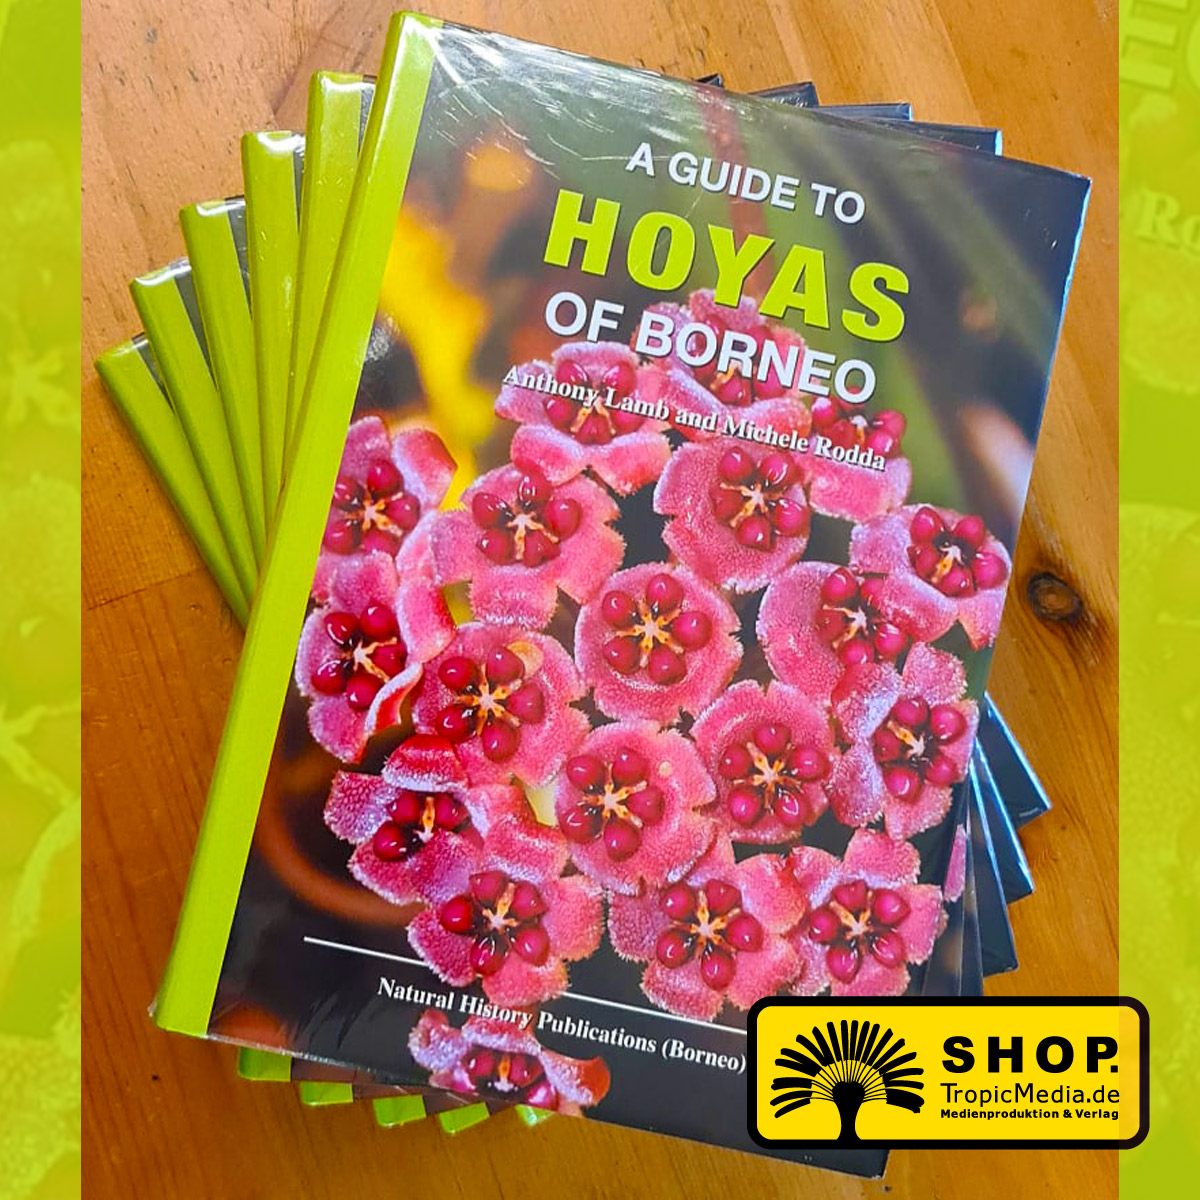 A Guide to Hoyas of Borneo - Hardcover - (Anthony Lamb, Michele Rodda, Linus Gokulsing, Steven Bosuang, Sri Rahayu)